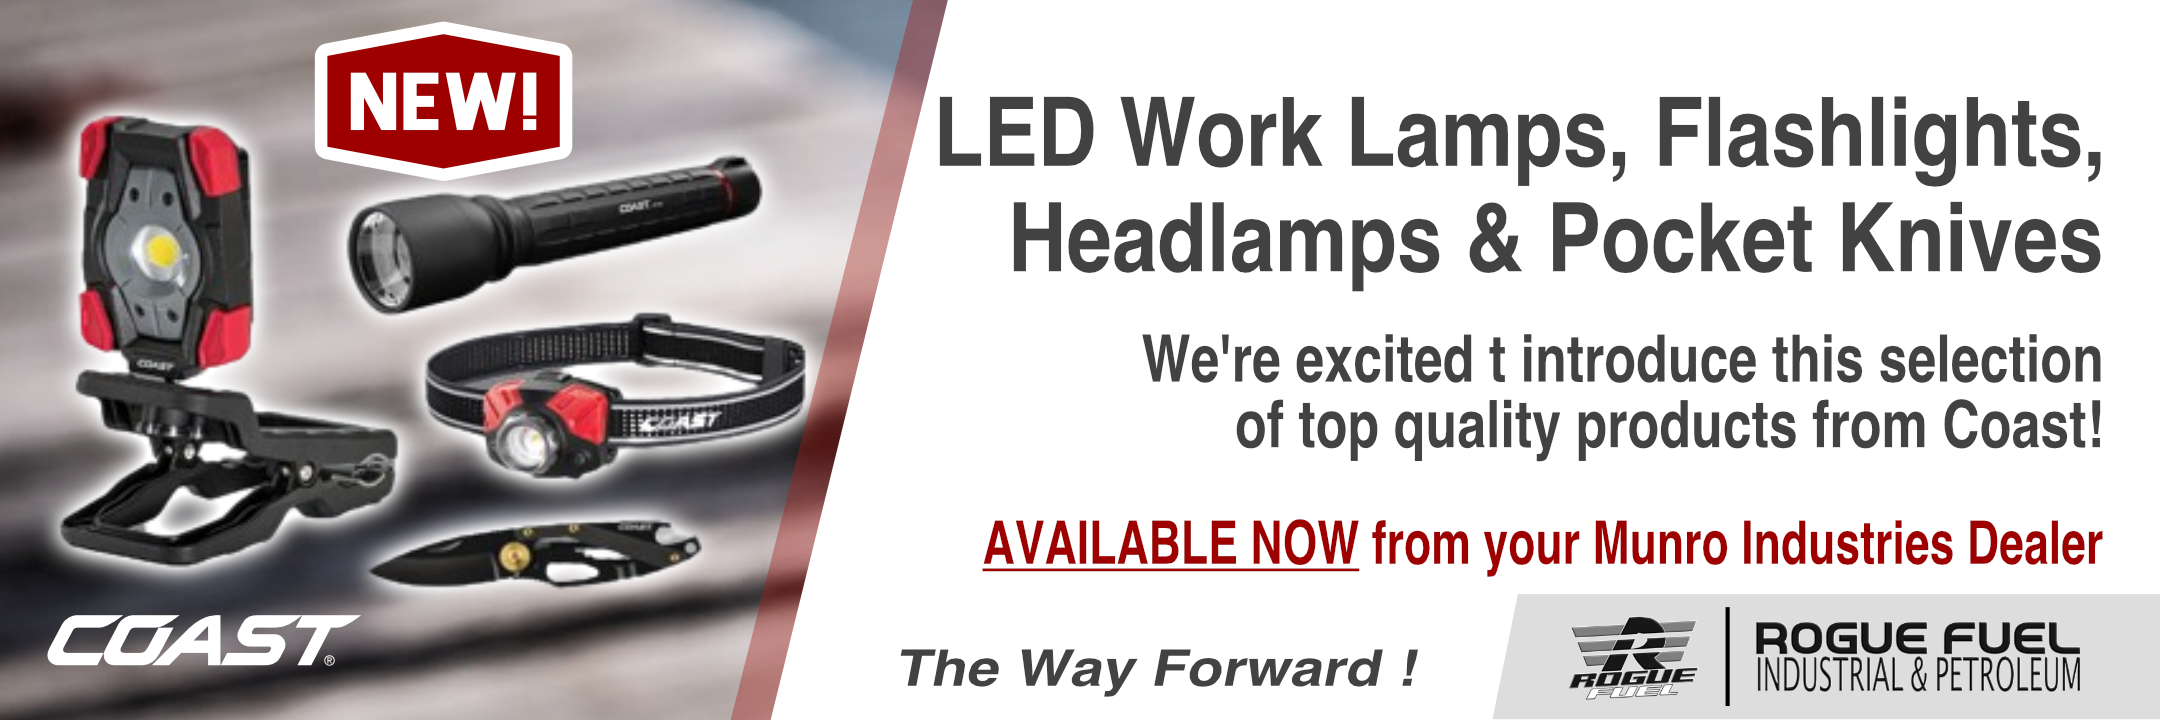 LED Work Lamps, Flashlights, Headlamps & Pocket Knives | Coast Portland | RogueFuel.ca | Munro Industries